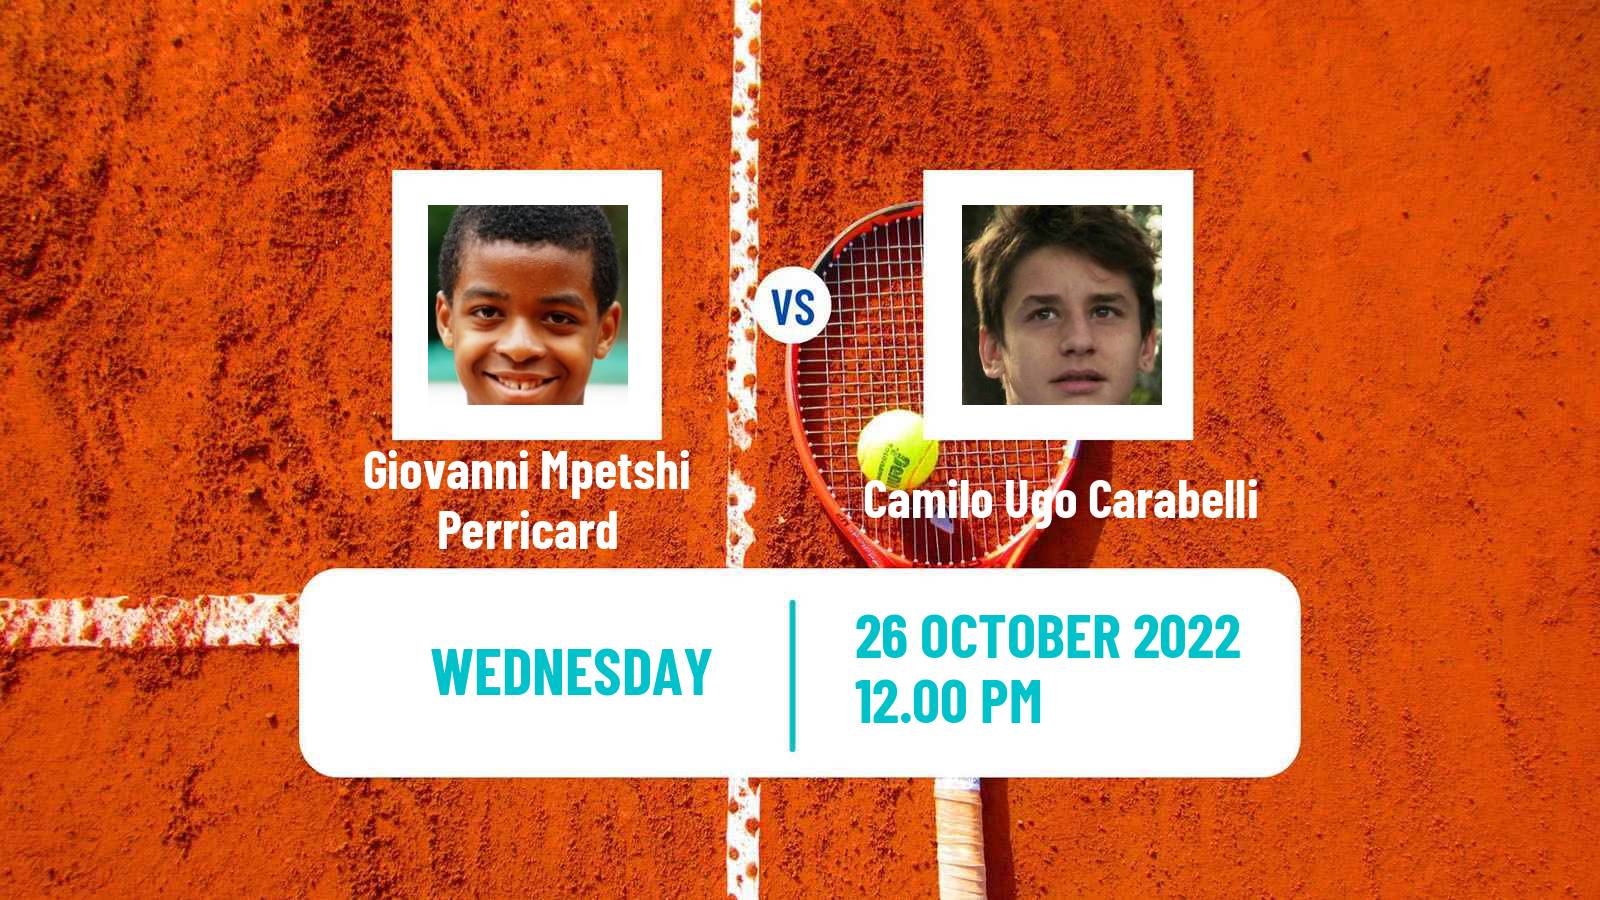 Tennis ATP Challenger Giovanni Mpetshi Perricard - Camilo Ugo Carabelli